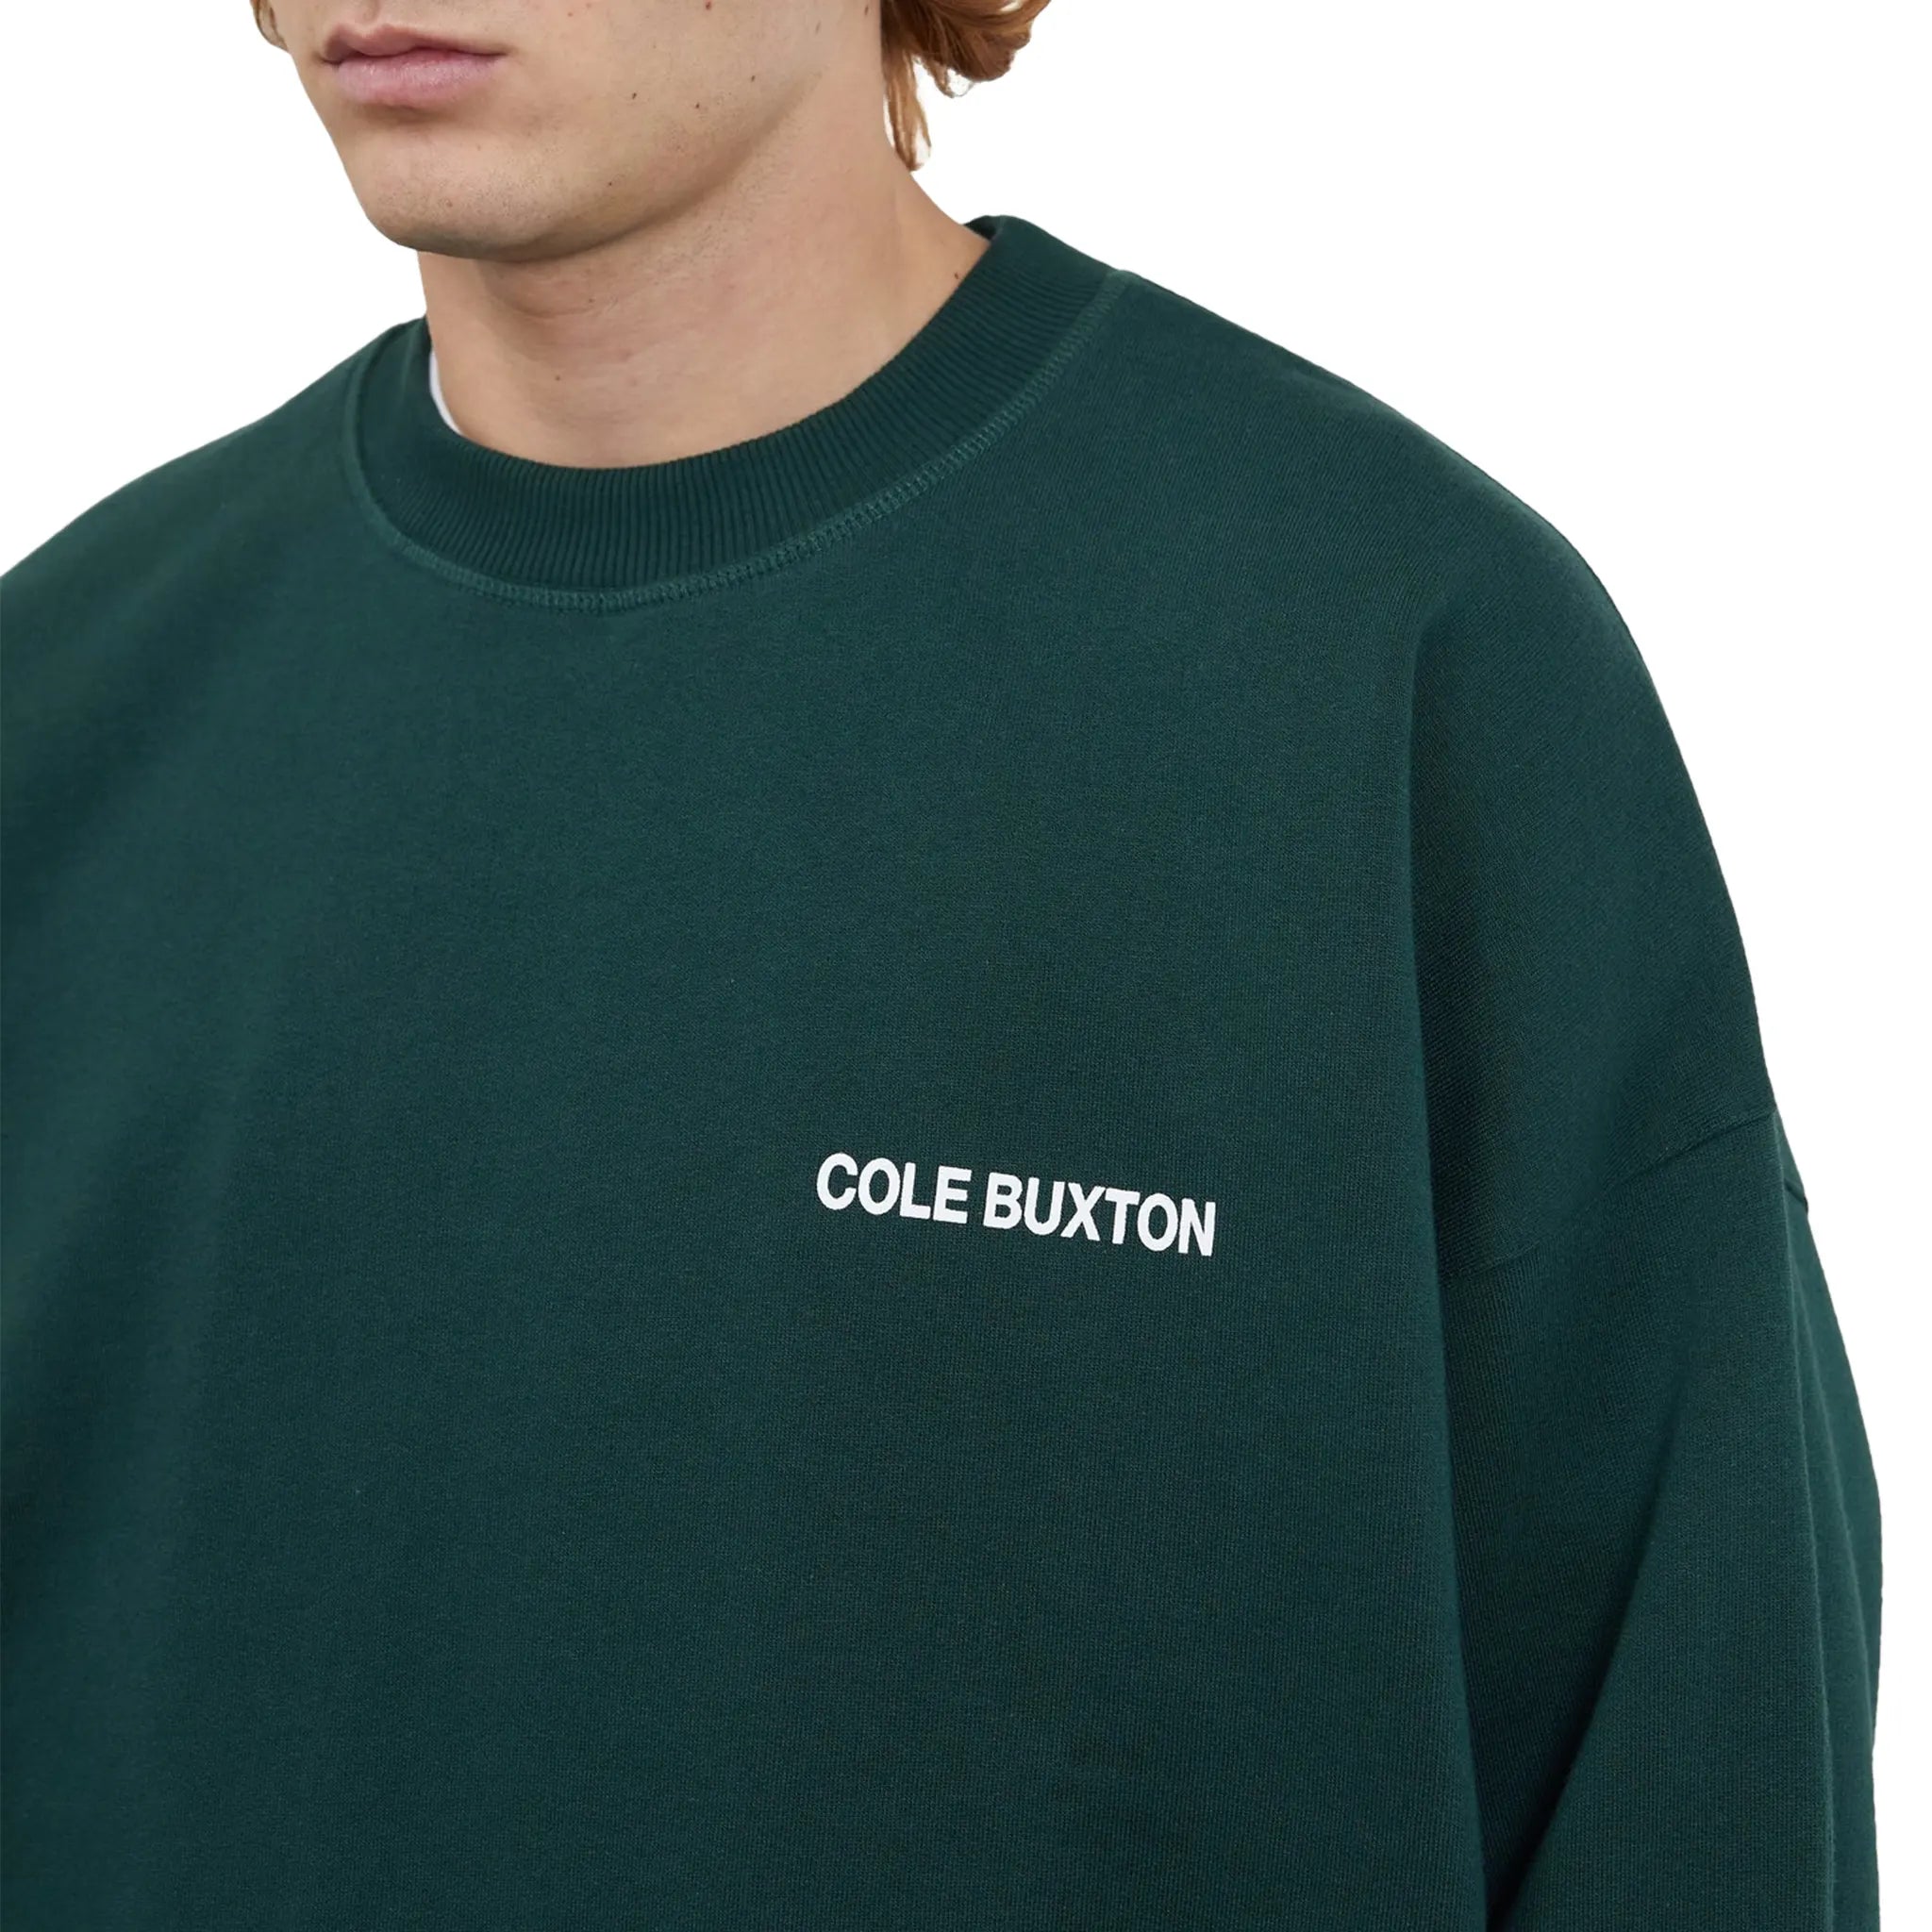 Model Detail view of Cole Buxton CB Sportswear Forest Green Sweatshirt ss23spsw001-610